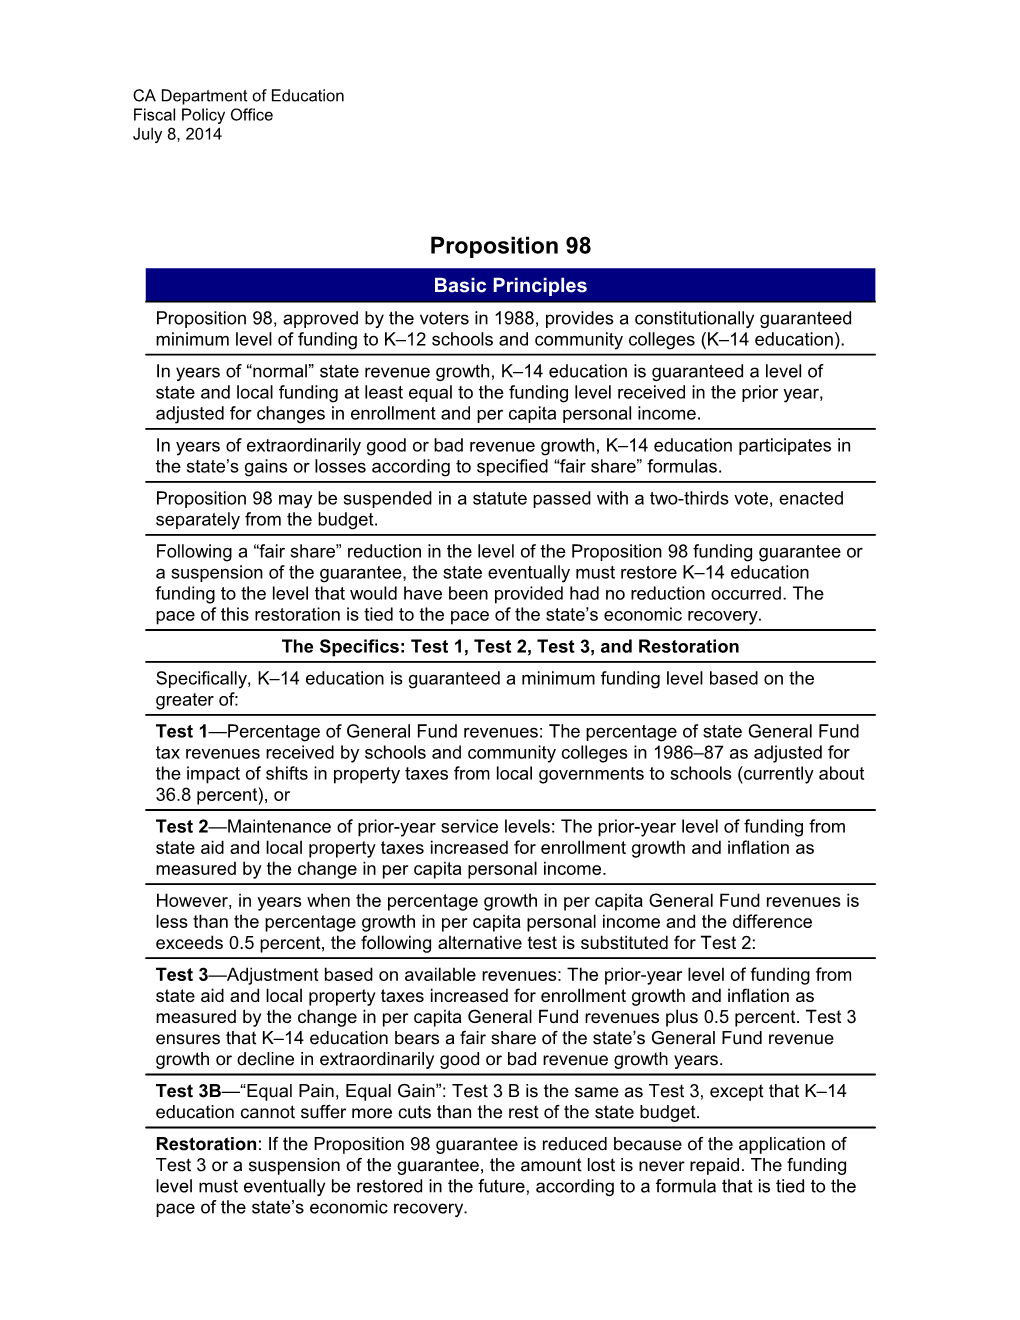 Proposition 98 Basic Principles - Education Budget (CA Dept of Education)